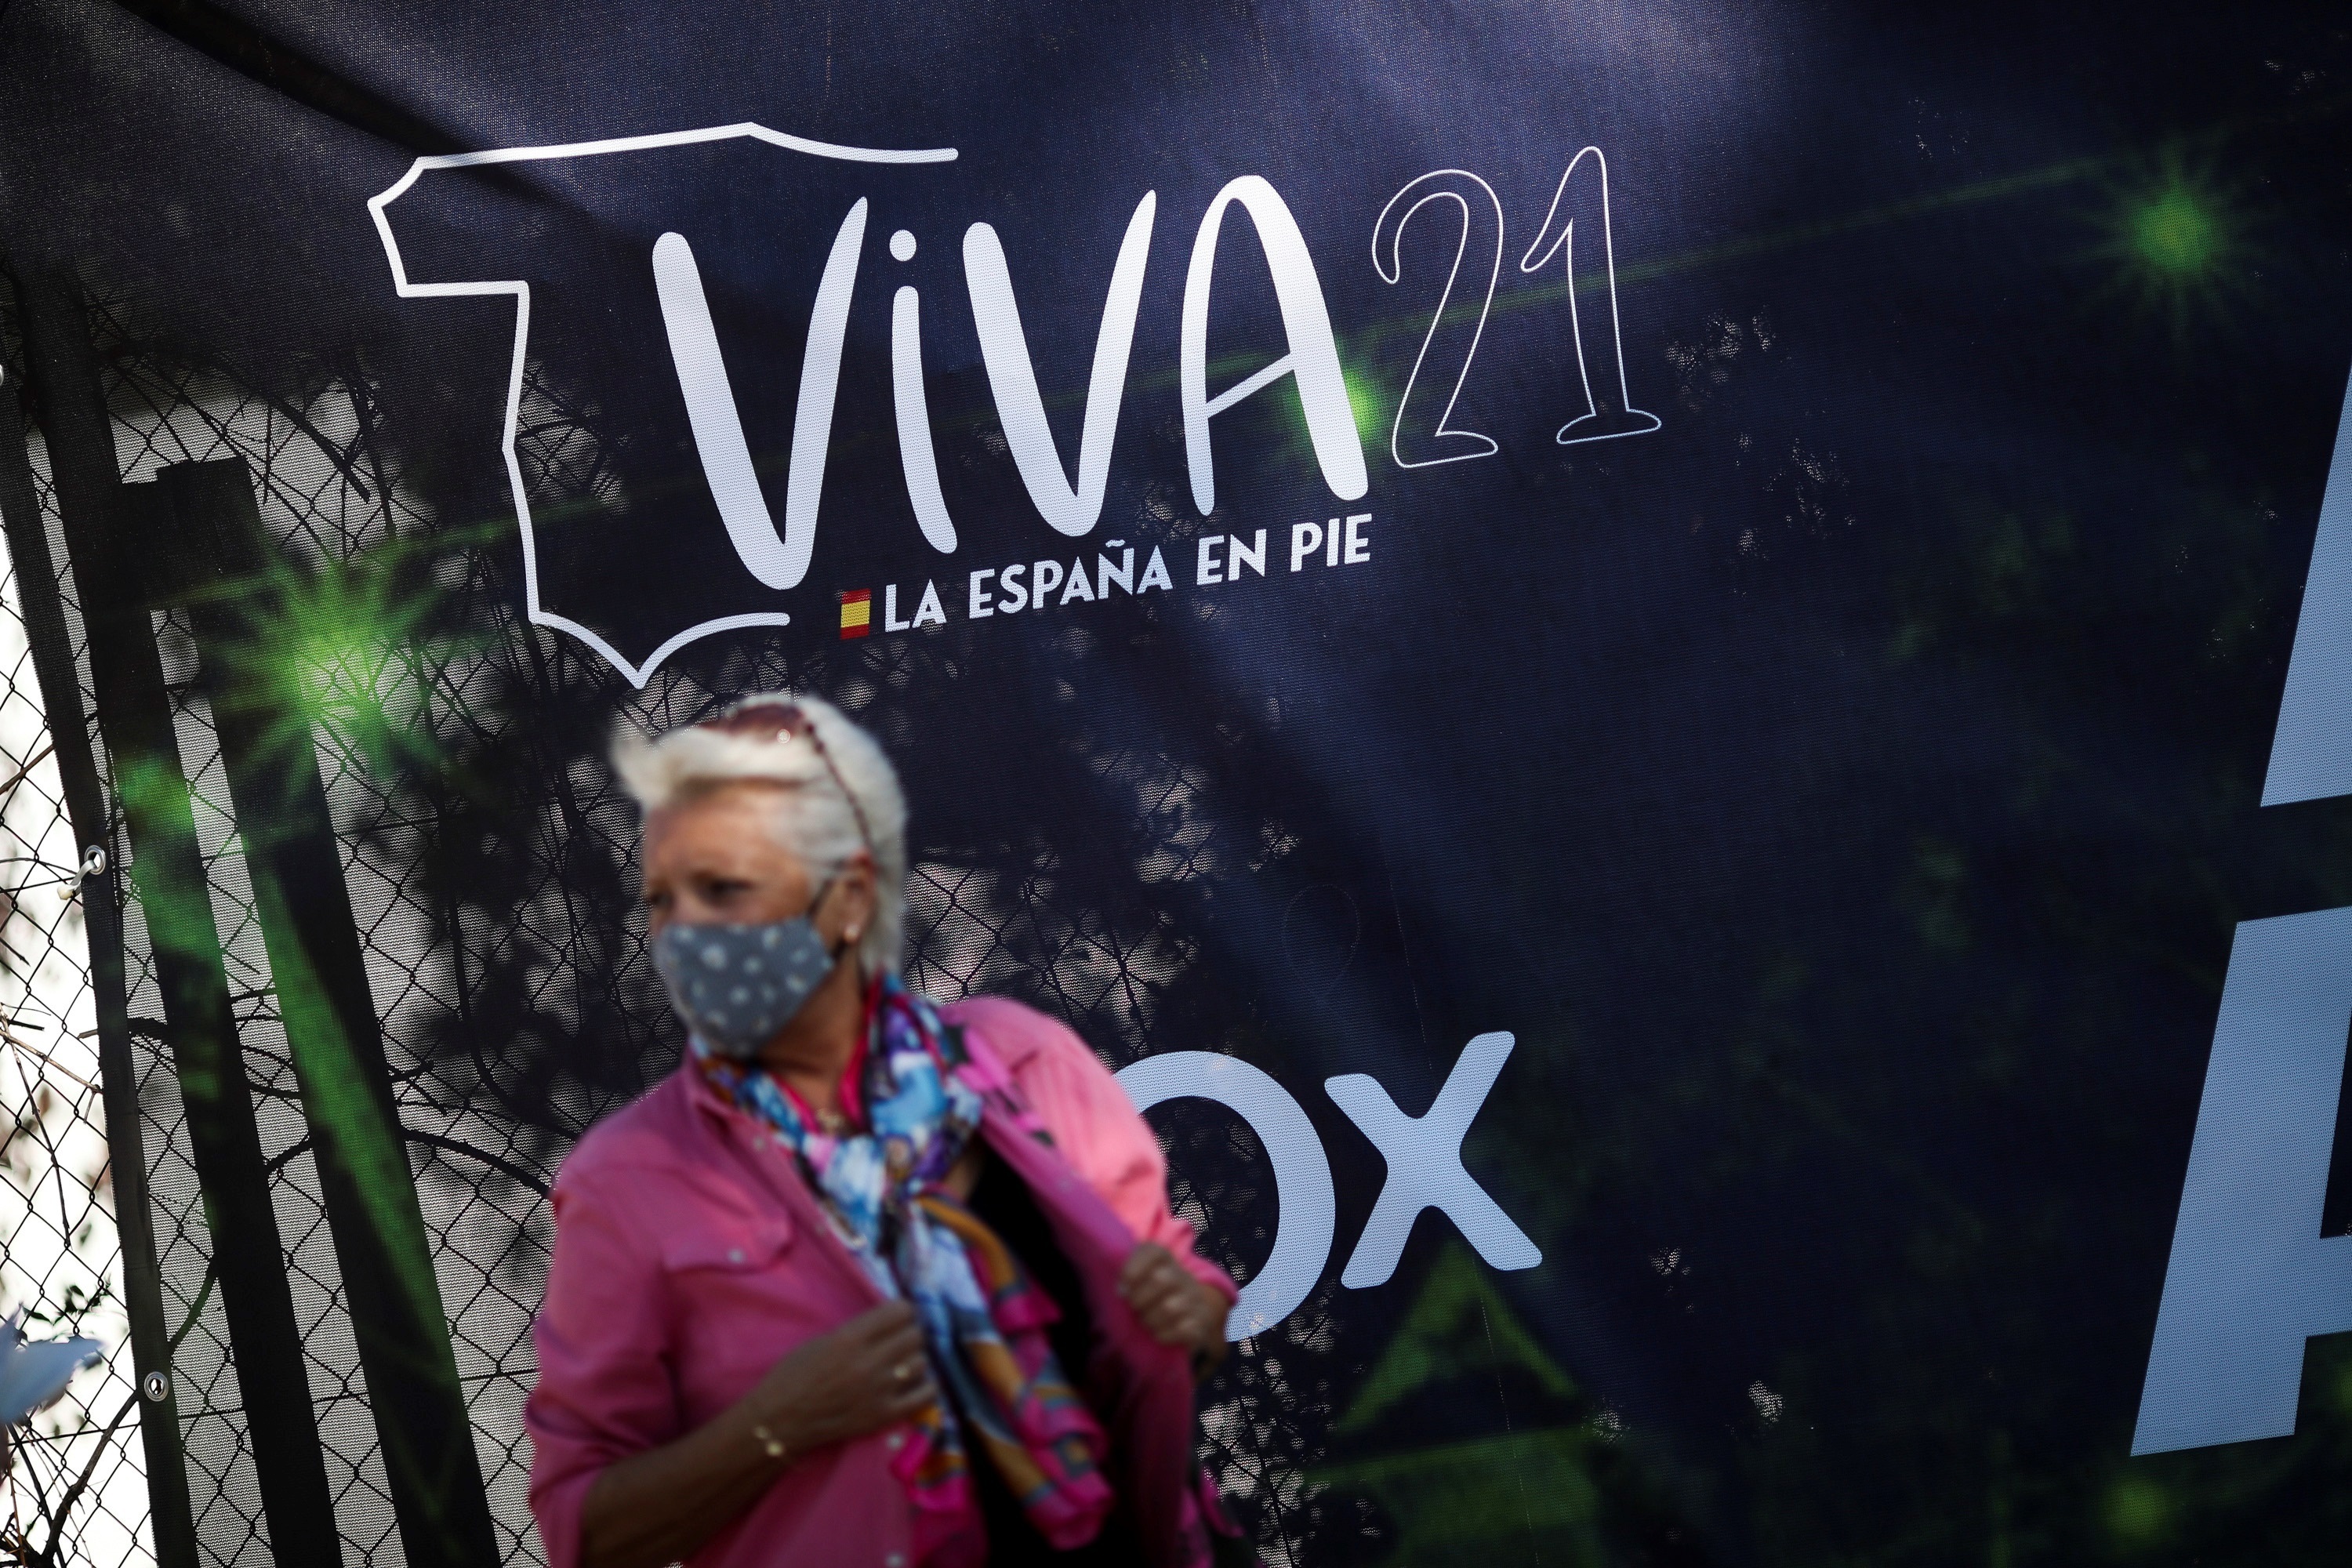 Acceso al recinto de Ifema en Madrid donde Vox celebra "Viva 21. La Espa